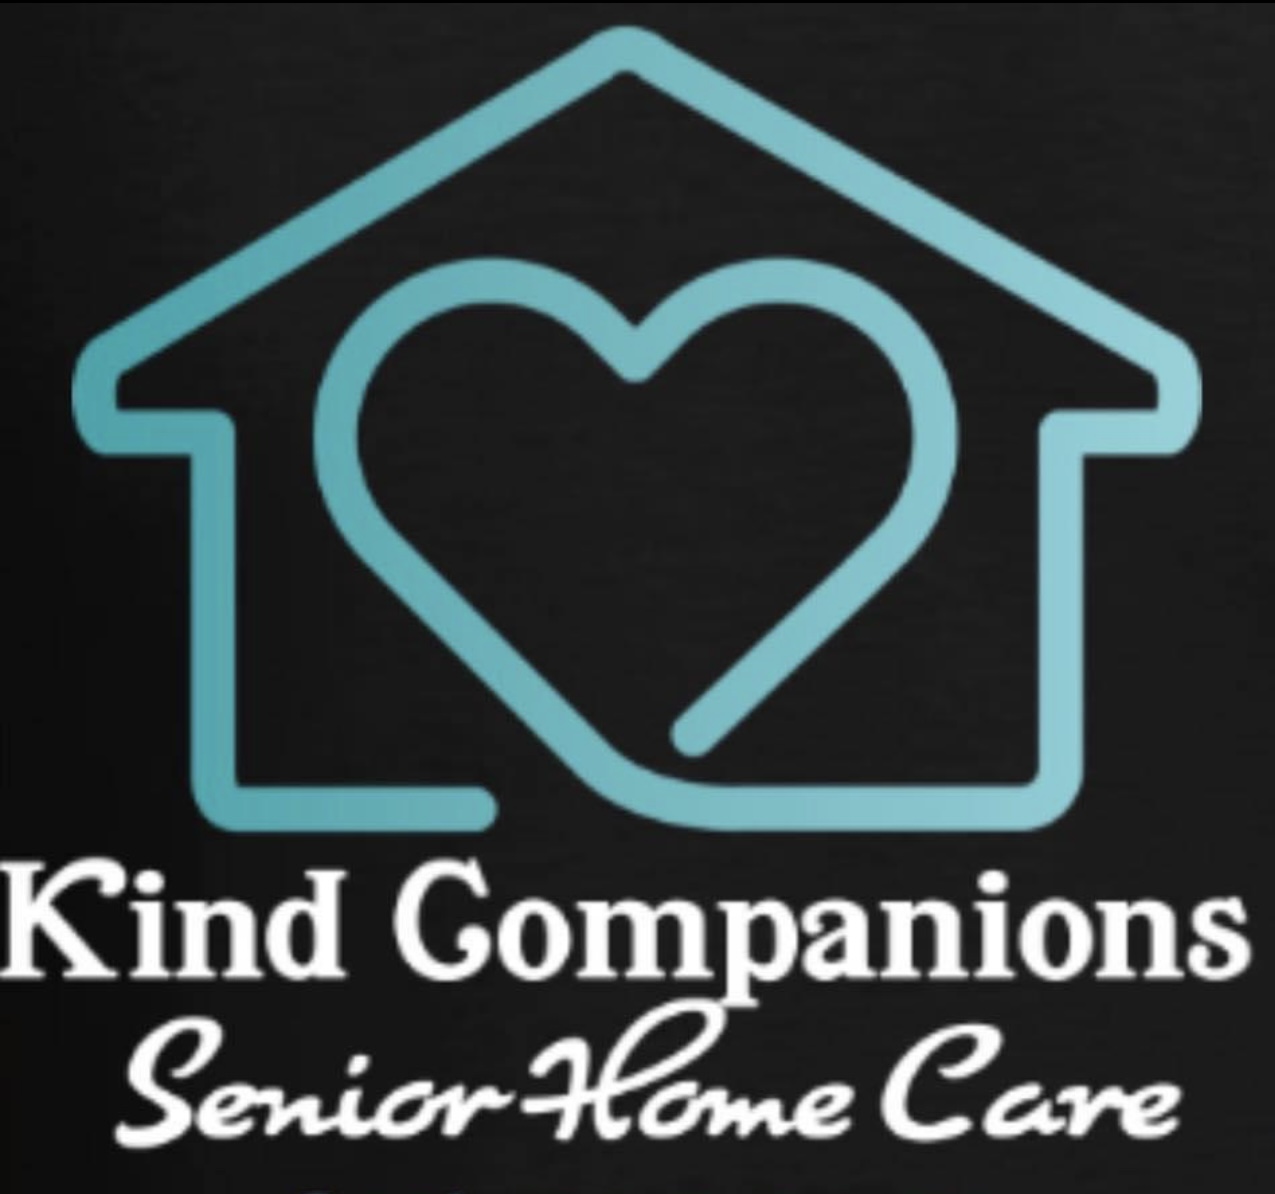 Kind Companions 4 You 440 E Market St, Somonauk Illinois 60552